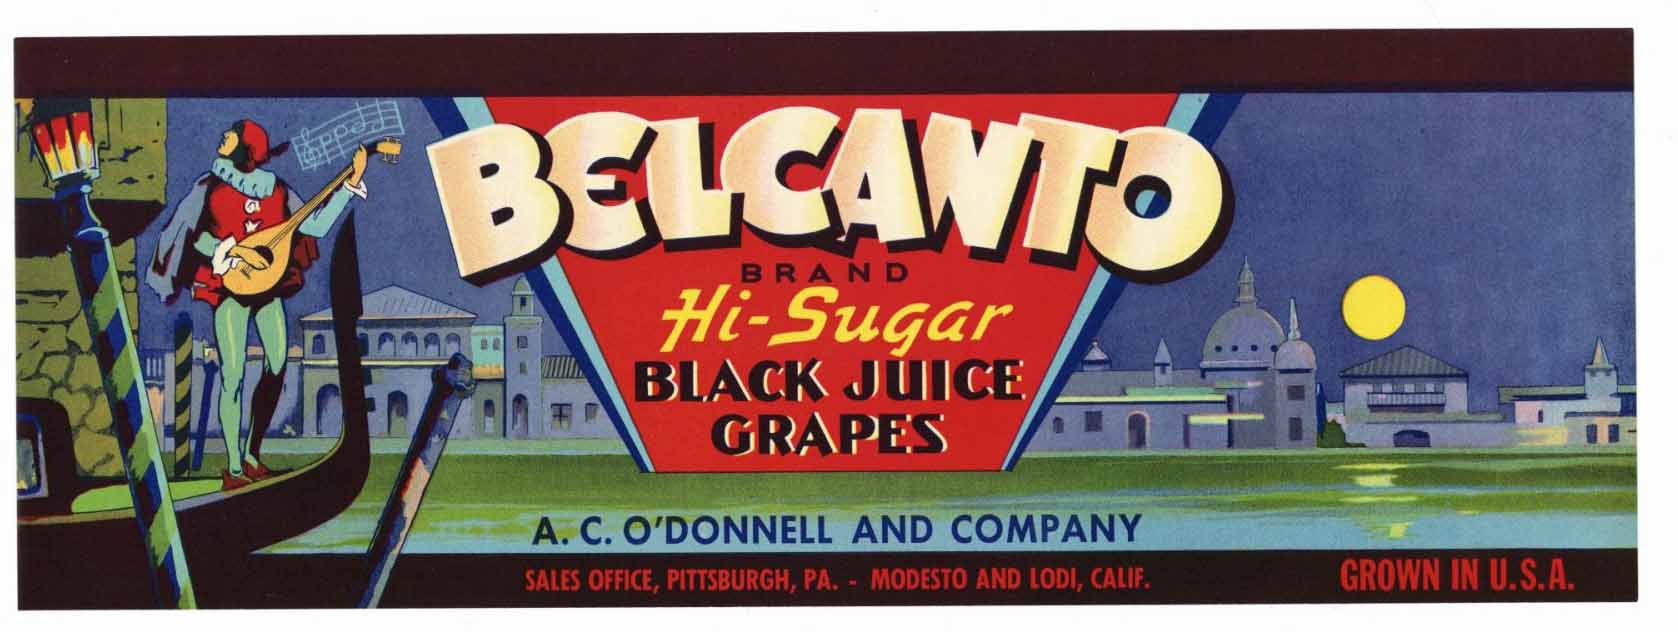 Belcanto Brand Vintage Grape Crate Label